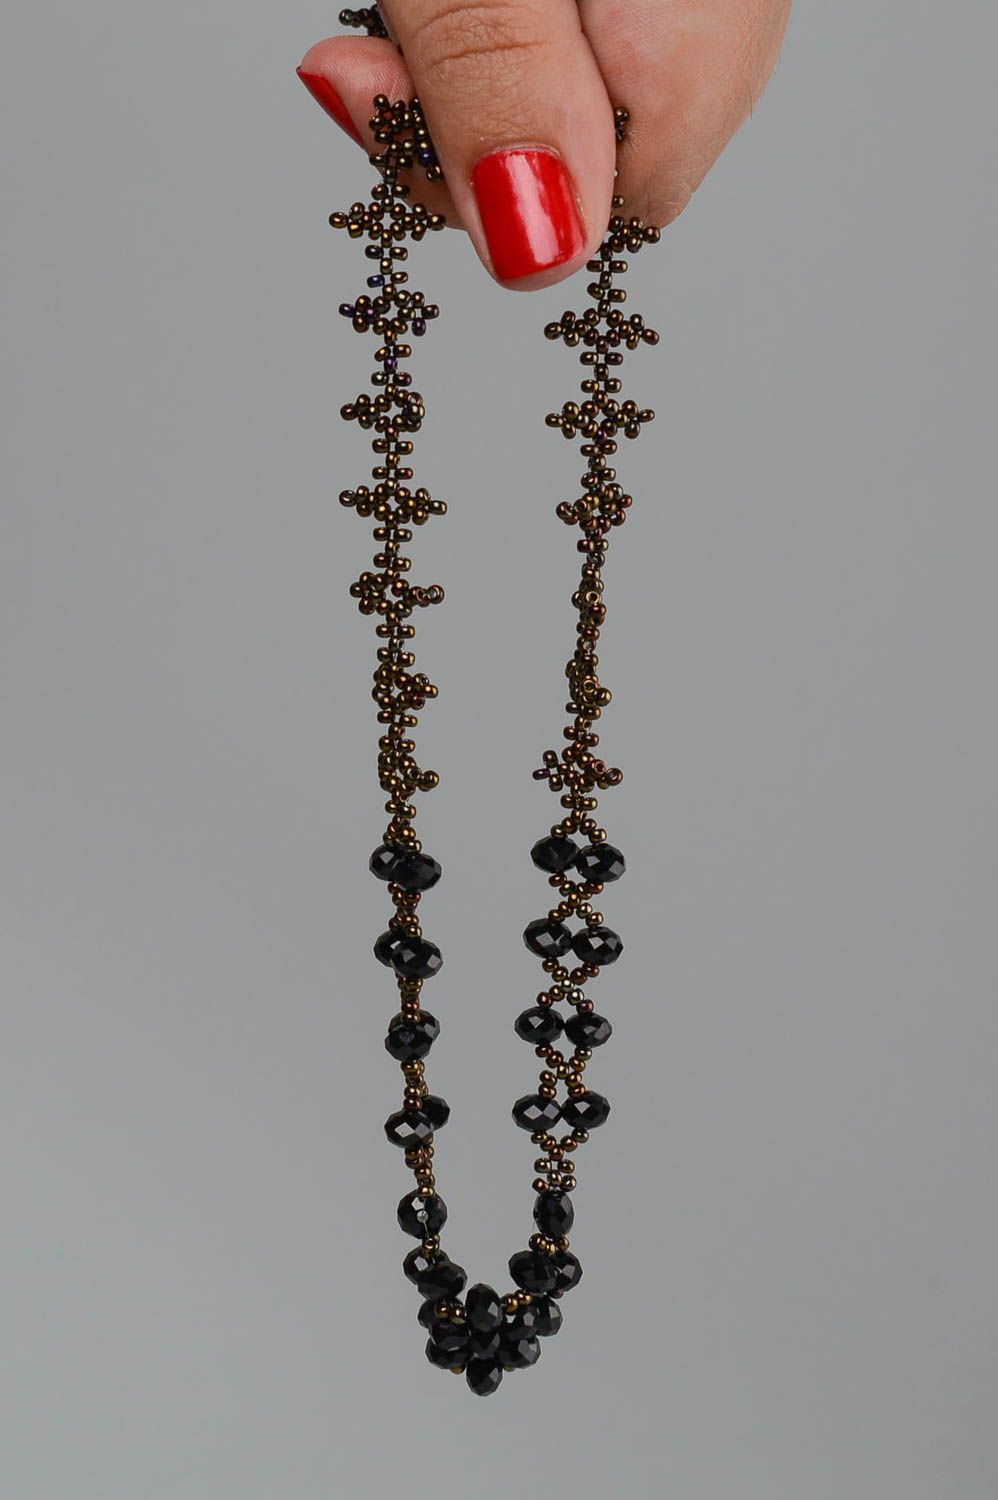 Handcraft necklace seed beads necklace designer accessories designer bijouterie photo 5